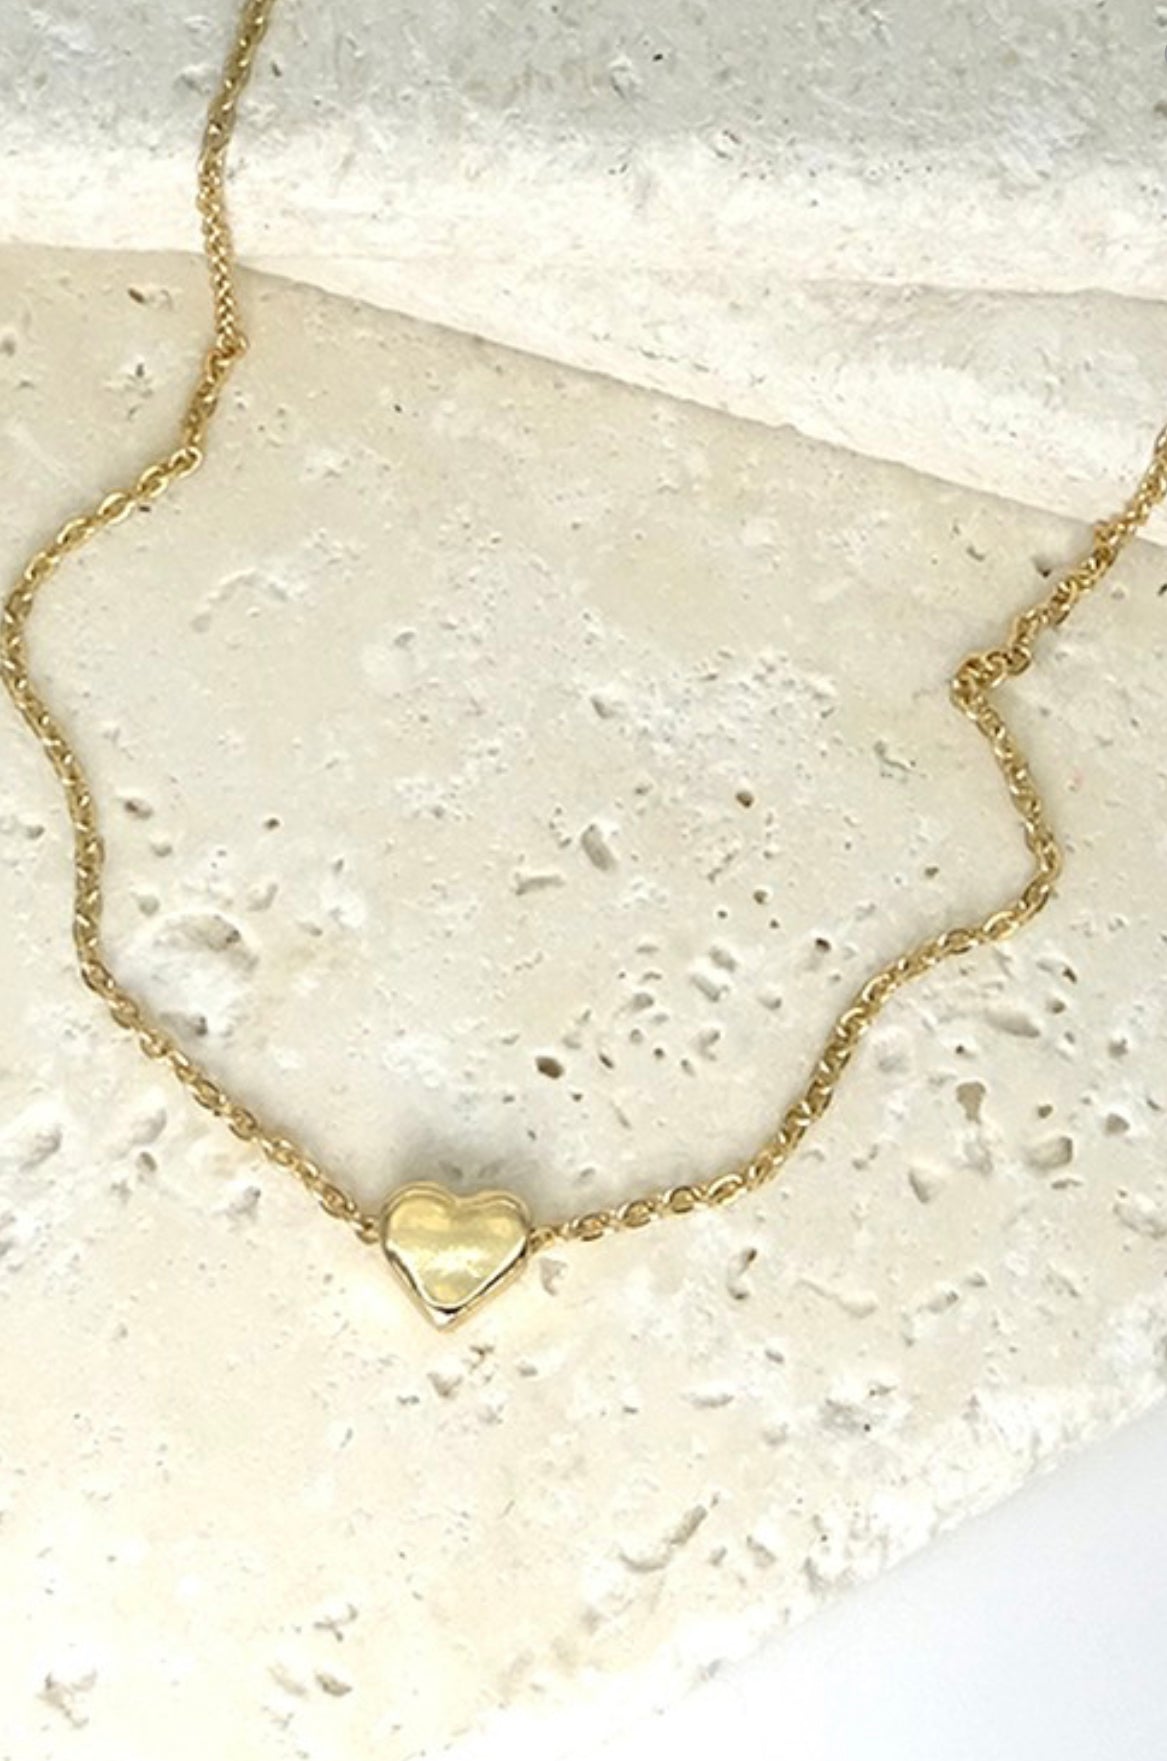 Simplicity Heart Necklace